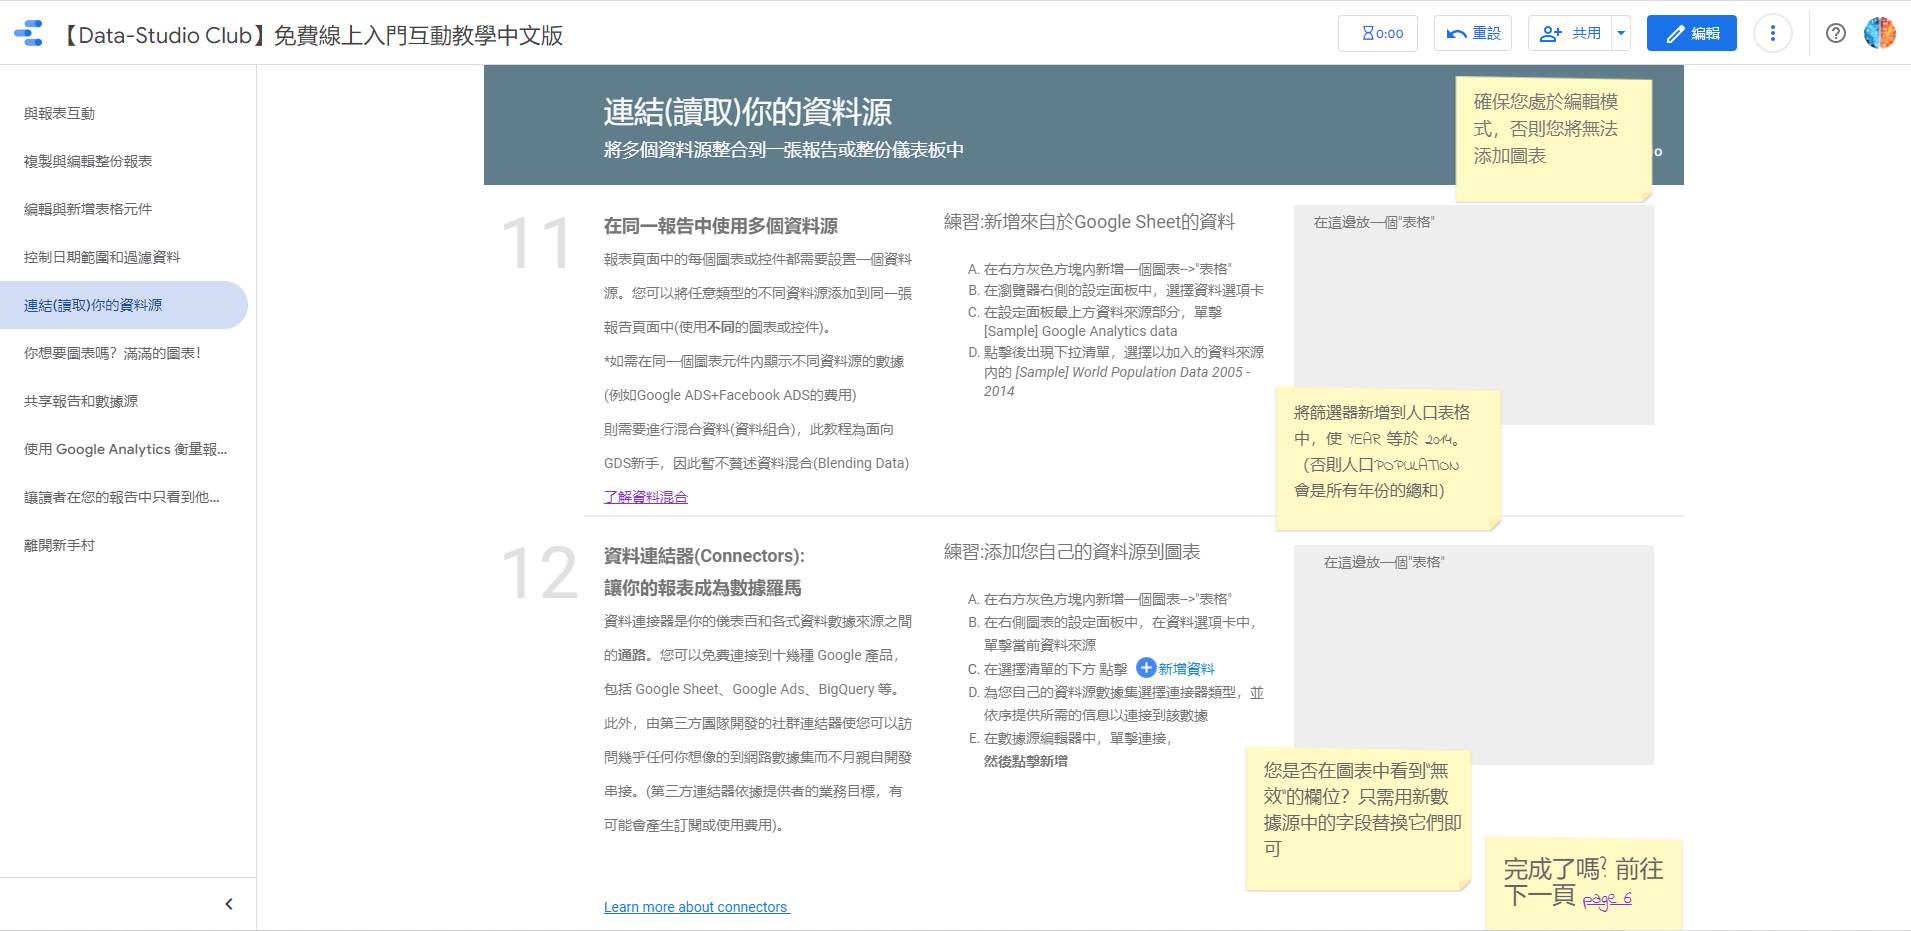 Google Data Studio online course chinese version-5